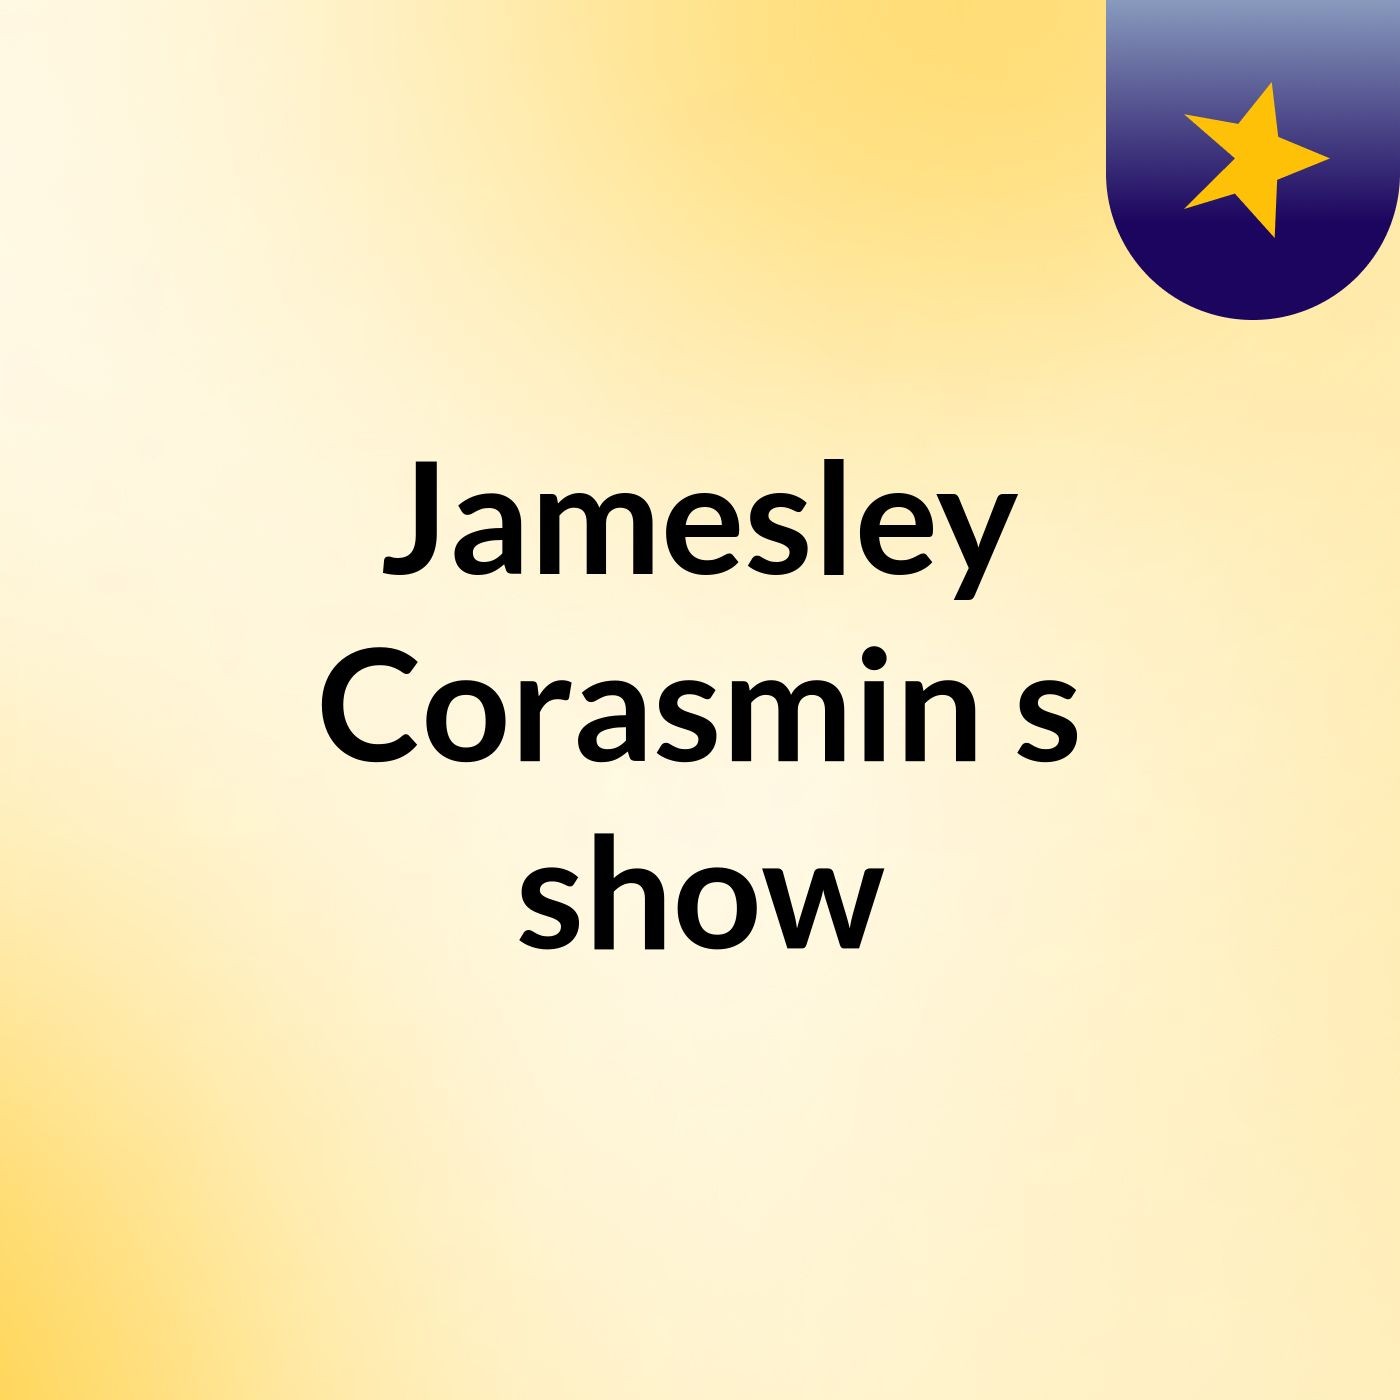 Jamesley Corasmin's show